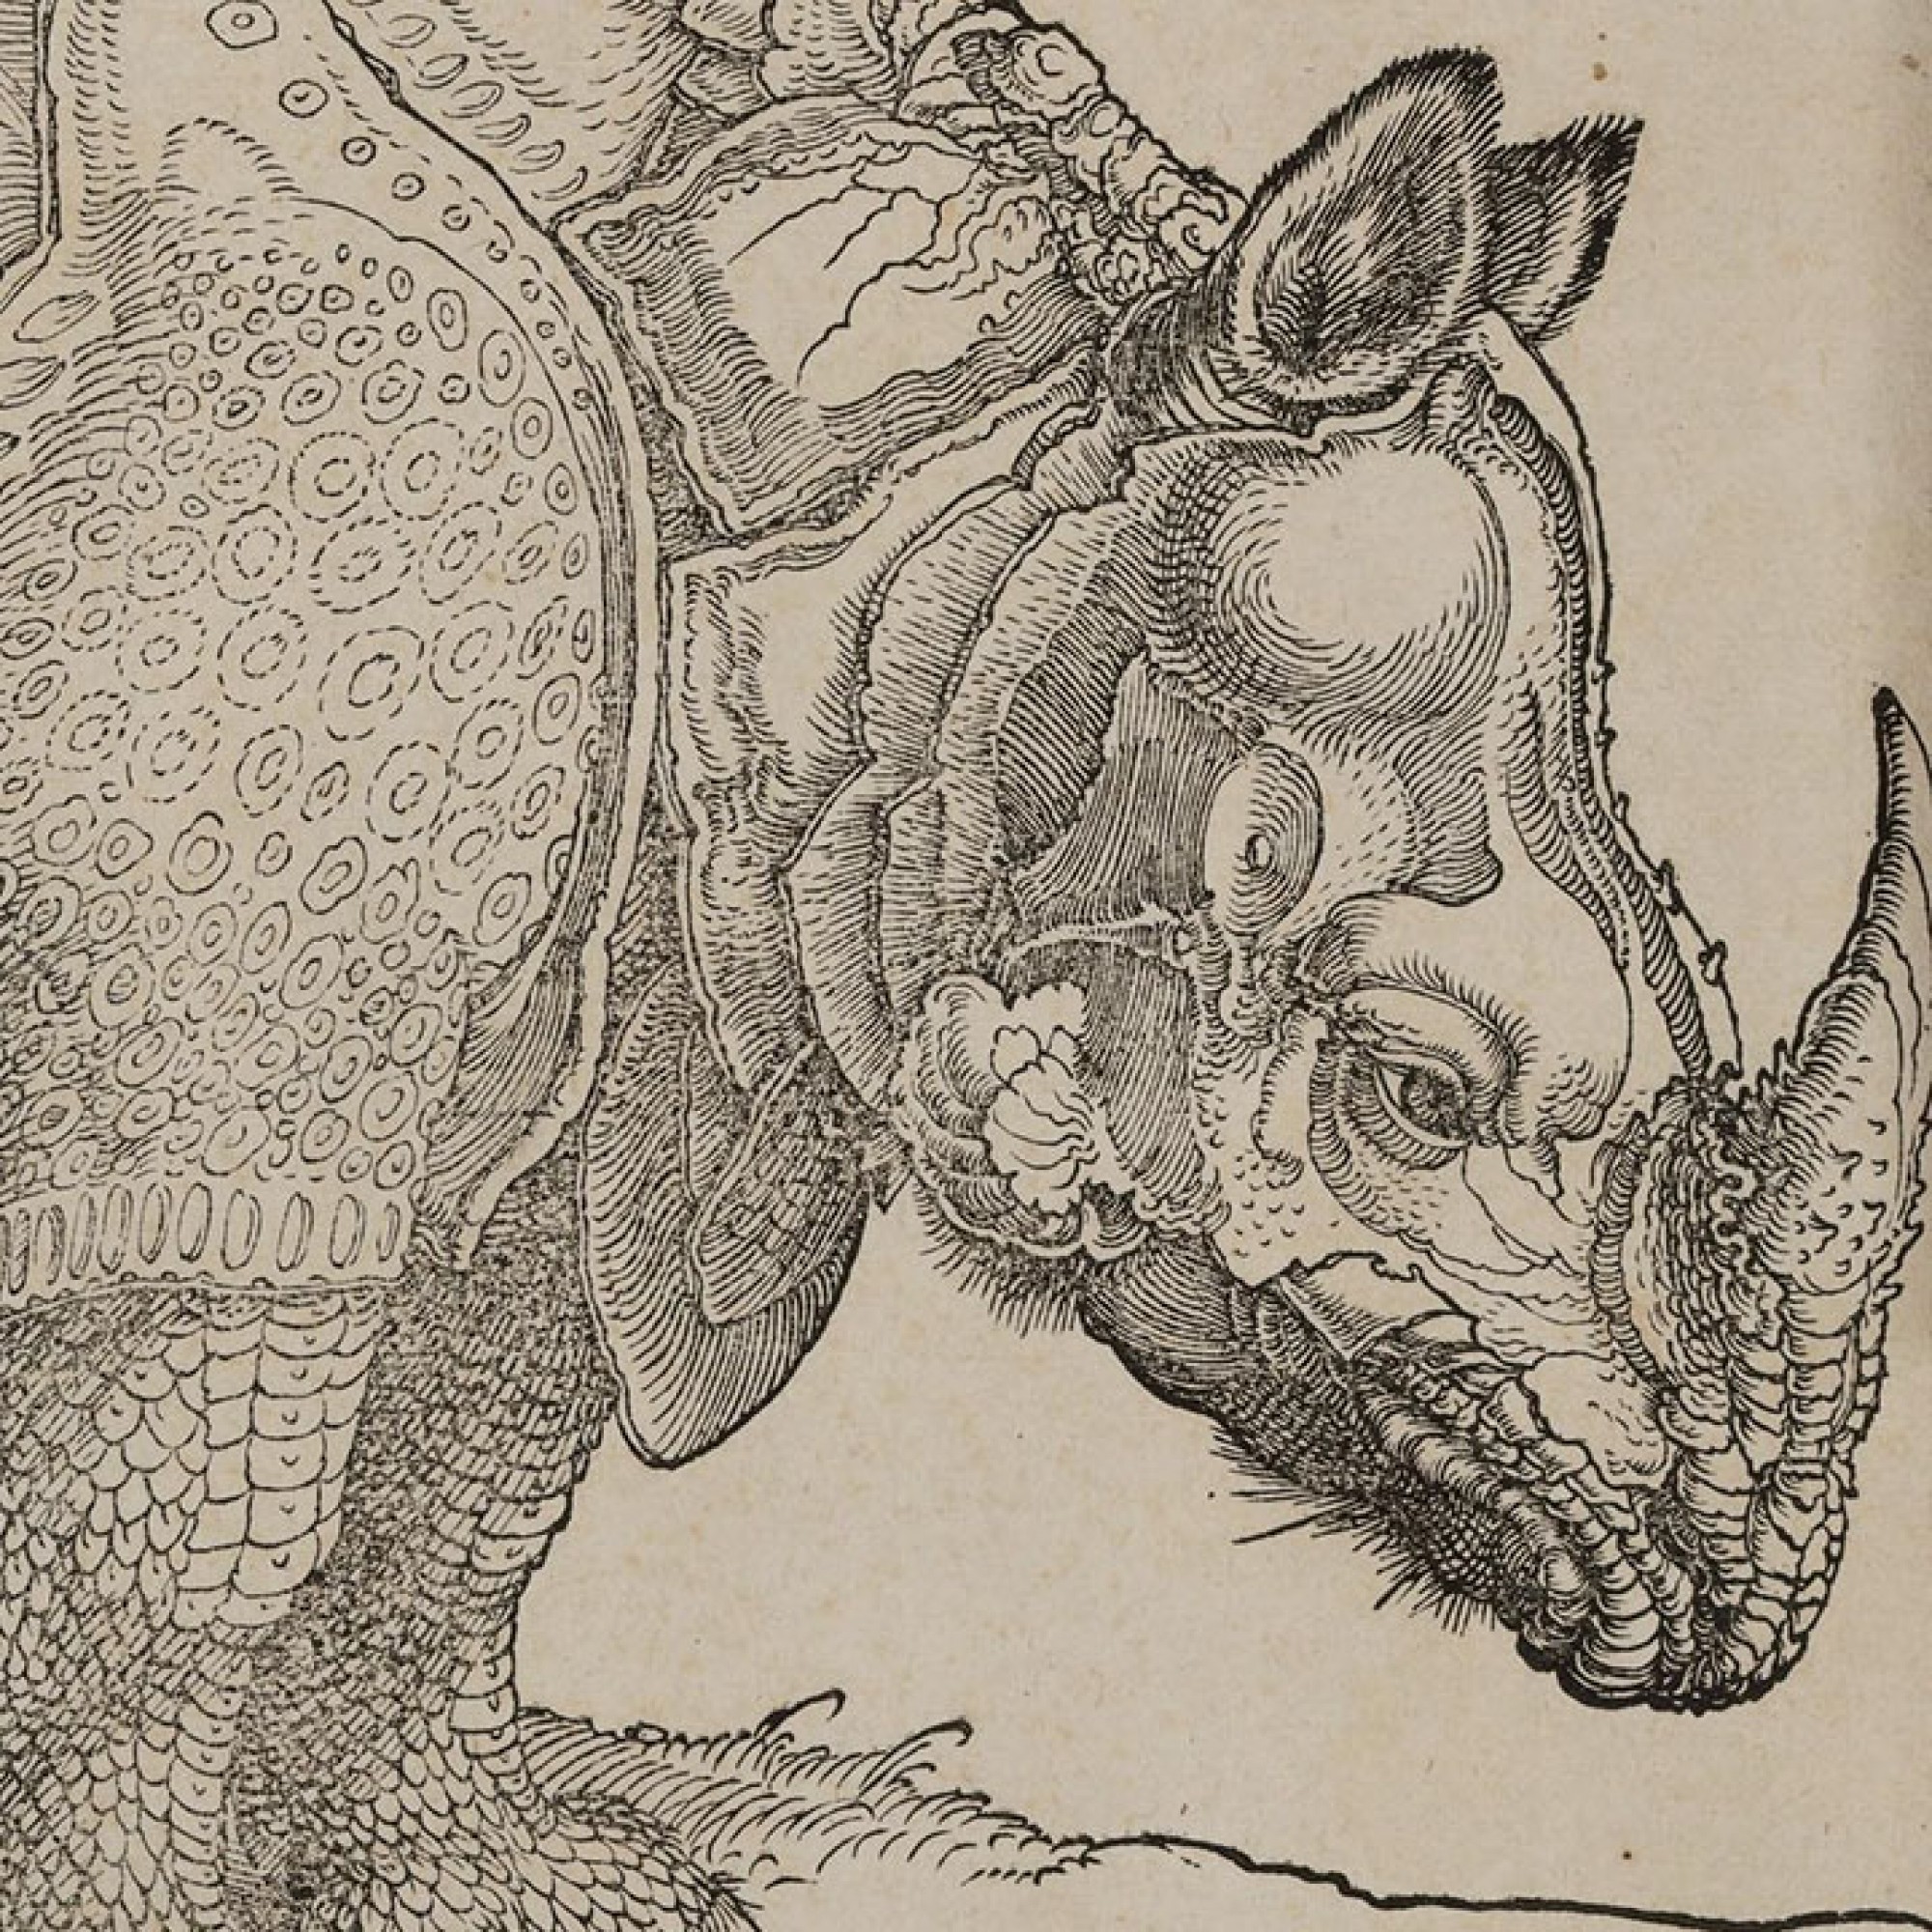 Albrecht Dürer. The Remondini collection